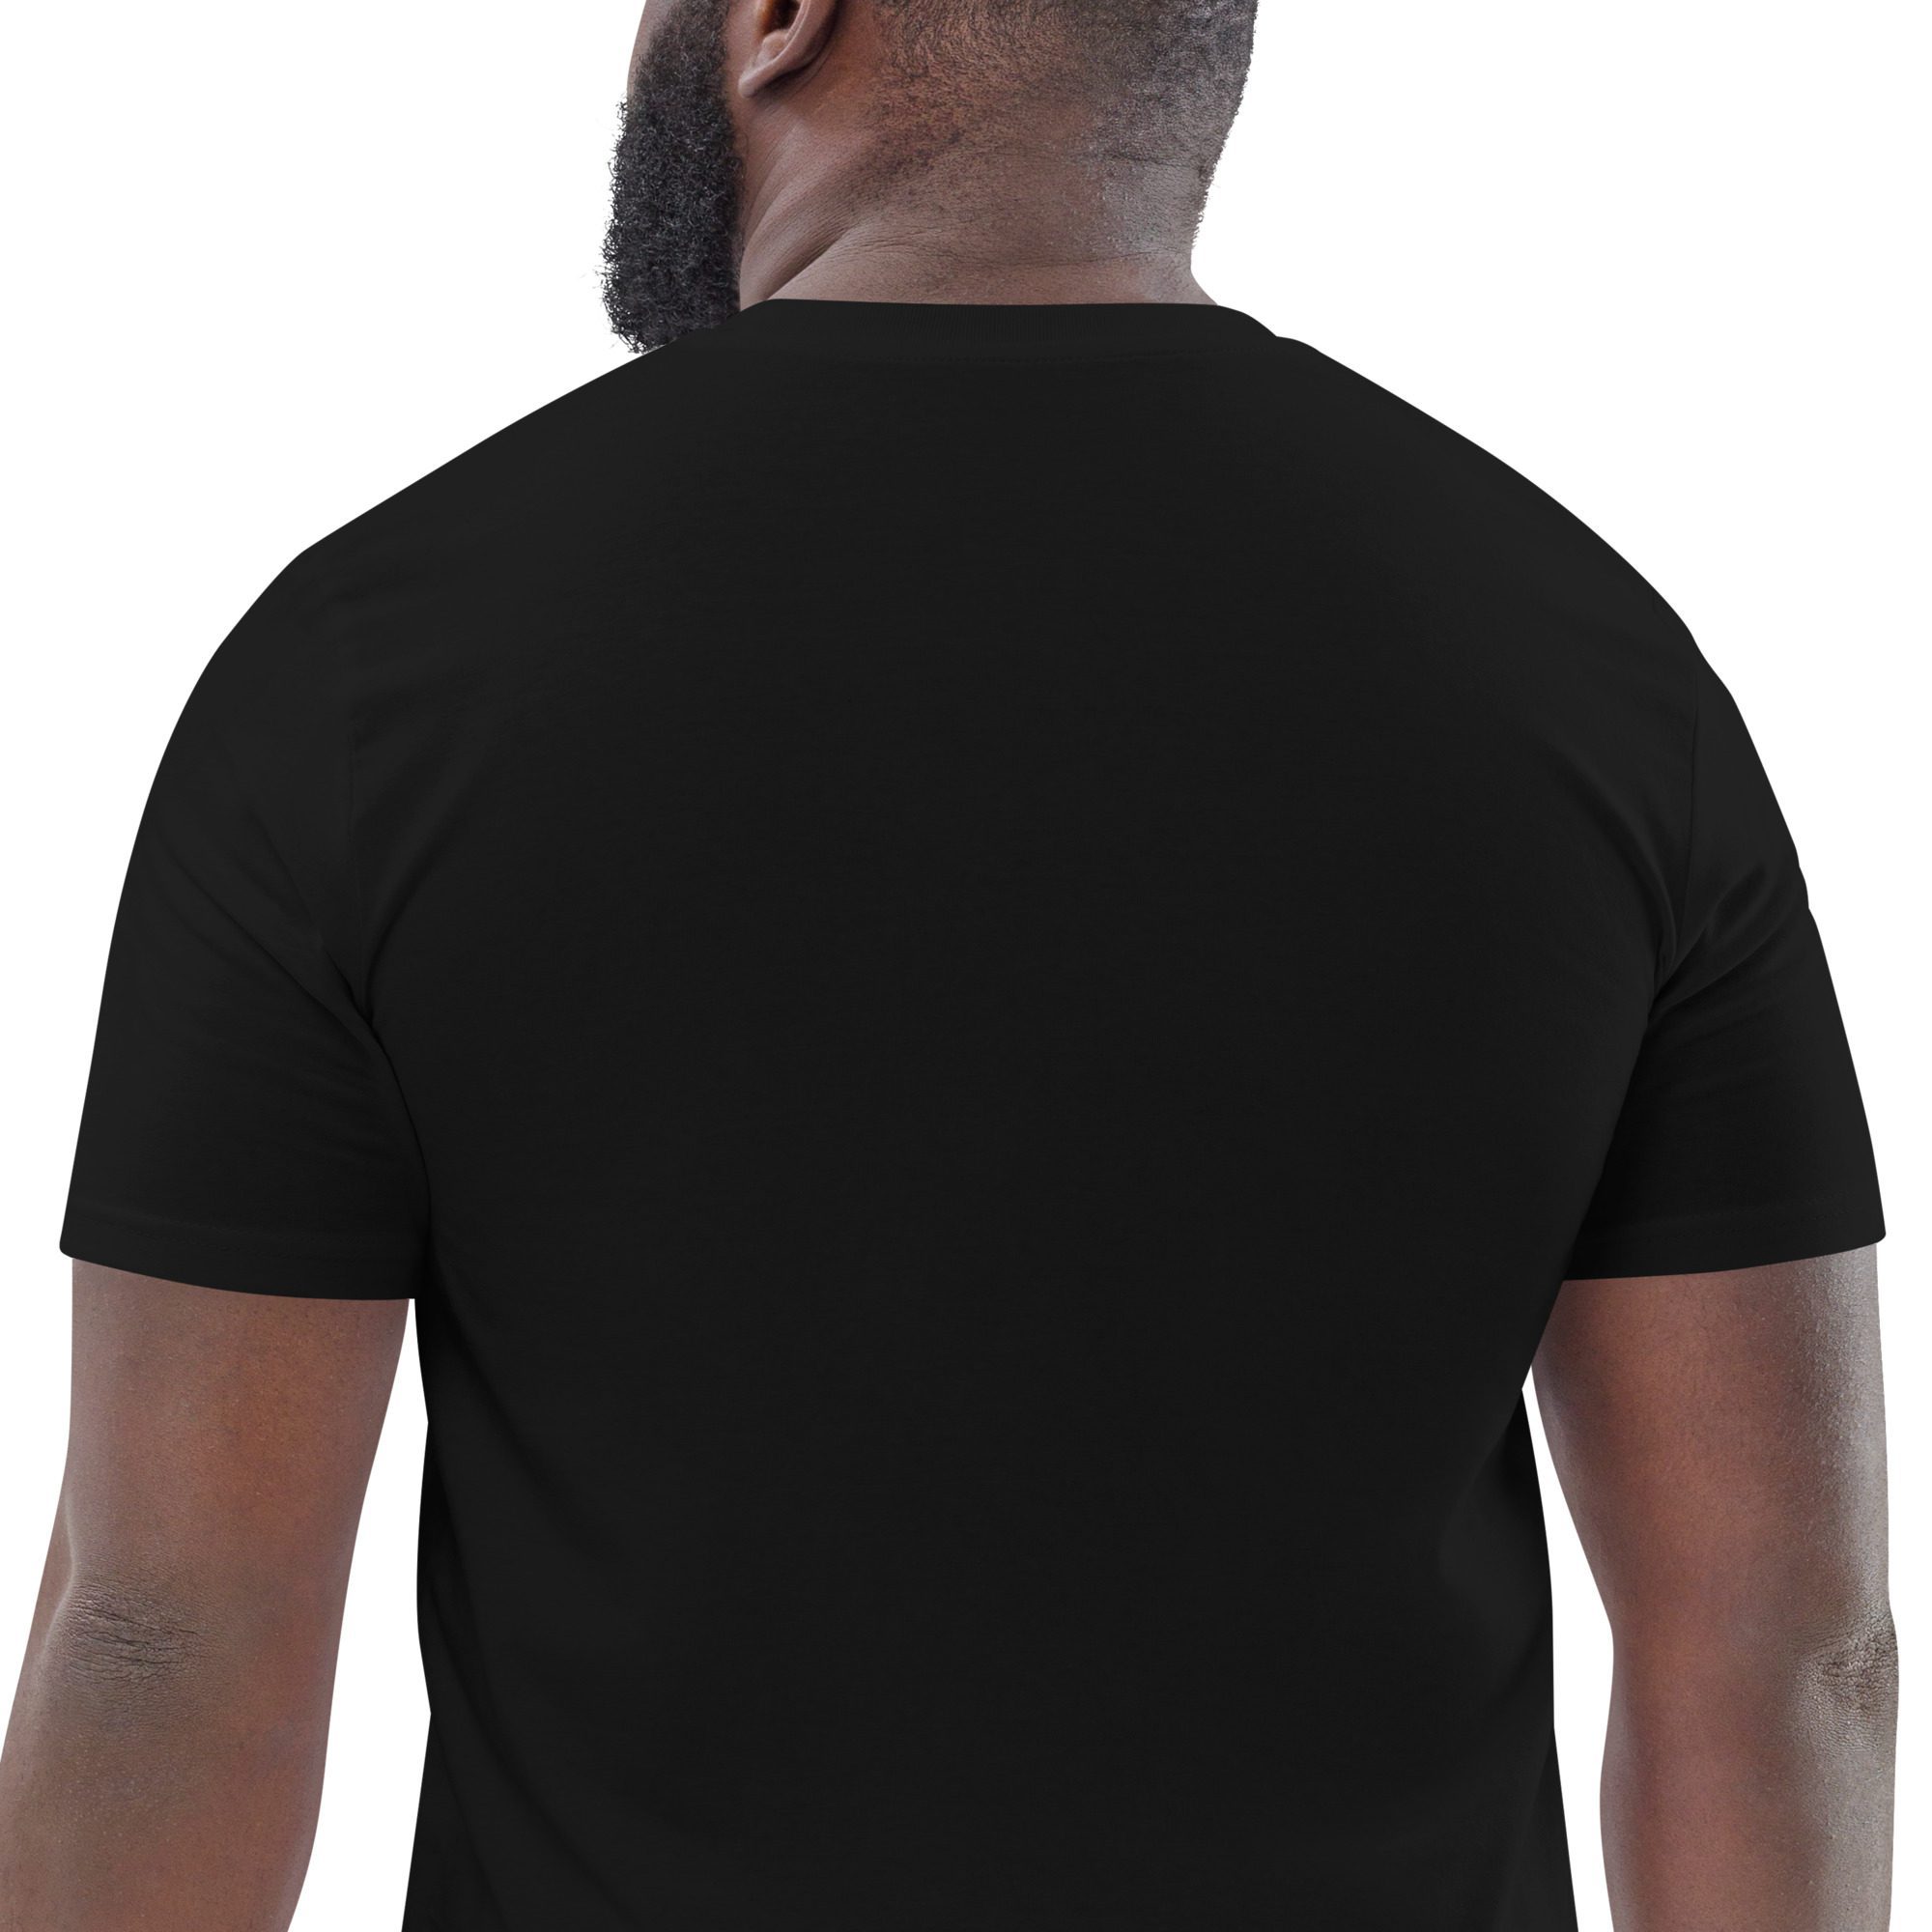 unisex organic cotton t shirt black zoomed in 651ada9388545